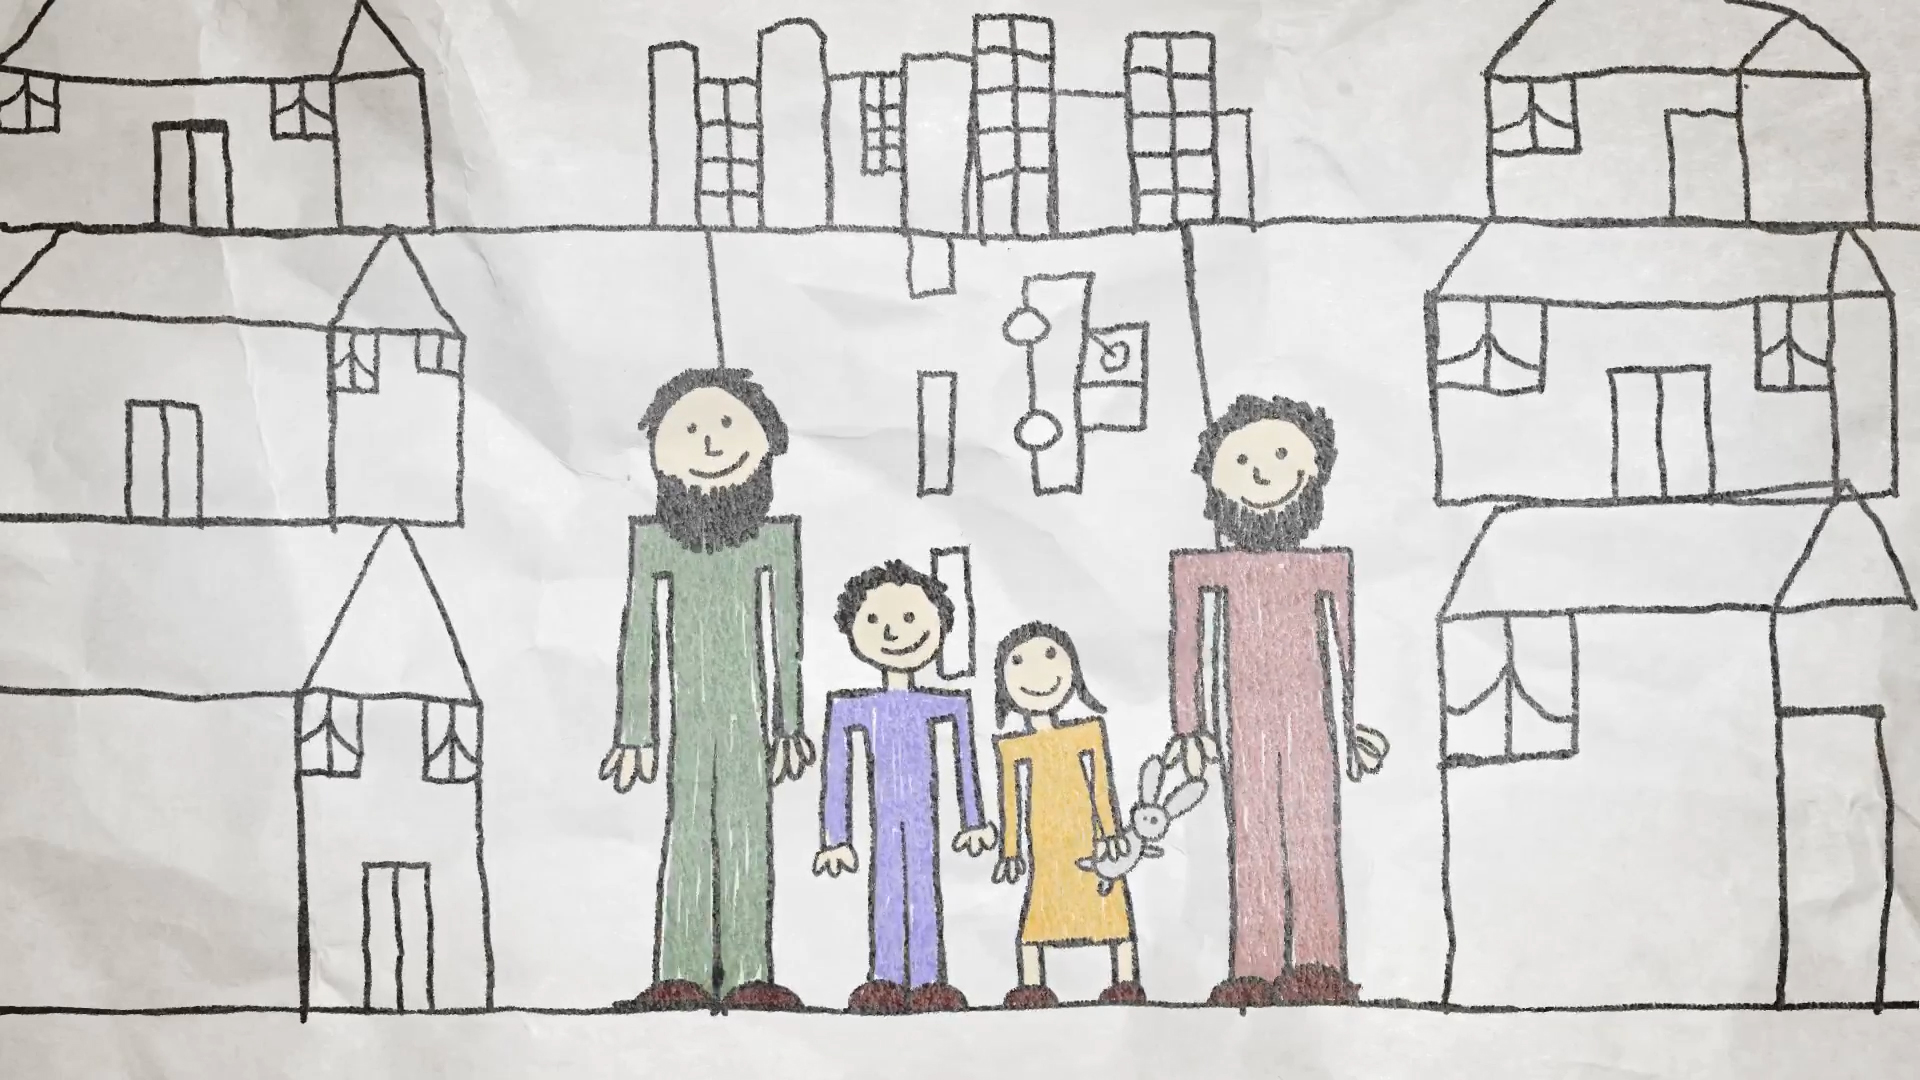 UNICEF – “A remény rajzai” campaign film